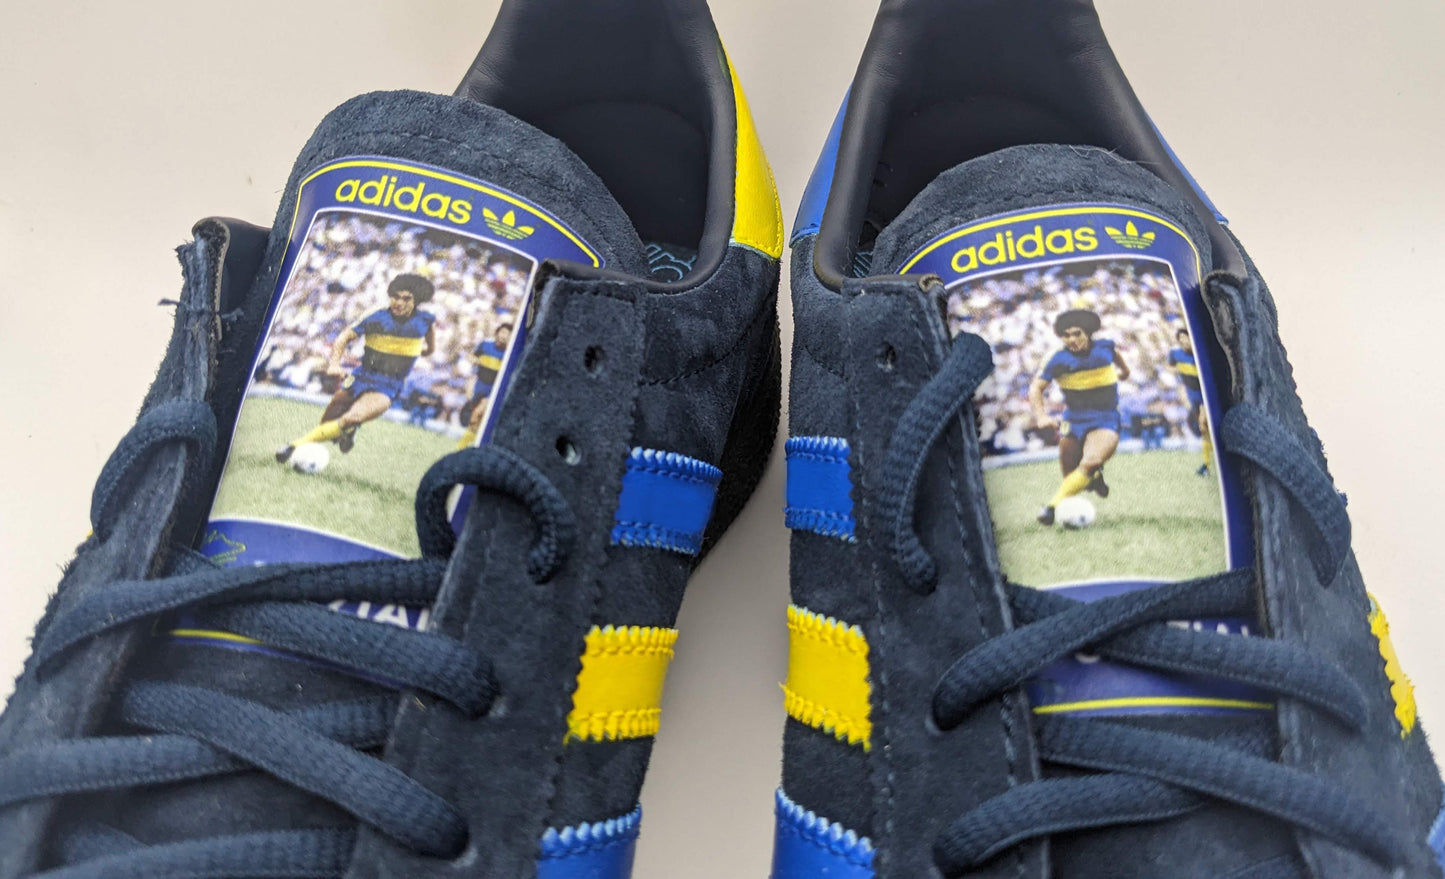 Limited edition Diego Maradona Boca Juniors Navy / Yellow / Blue Adidas custom Handball Spezial trainers / sneakers